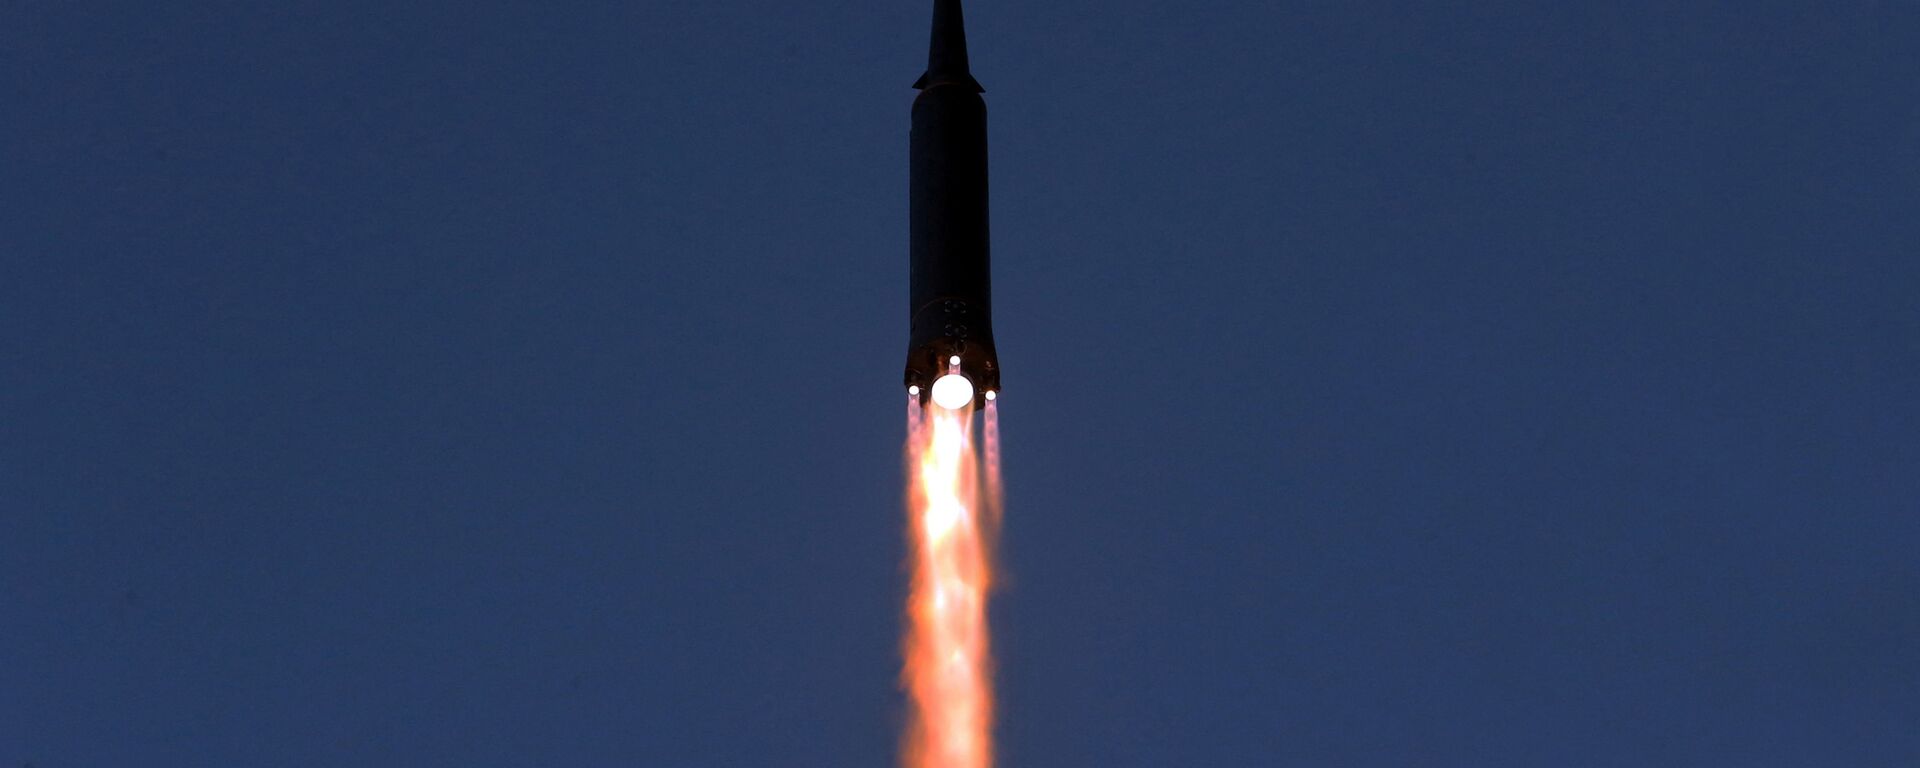 Запуск ракеты в КНДР  - 金刚后退了一步, 1920, 12.01.2022